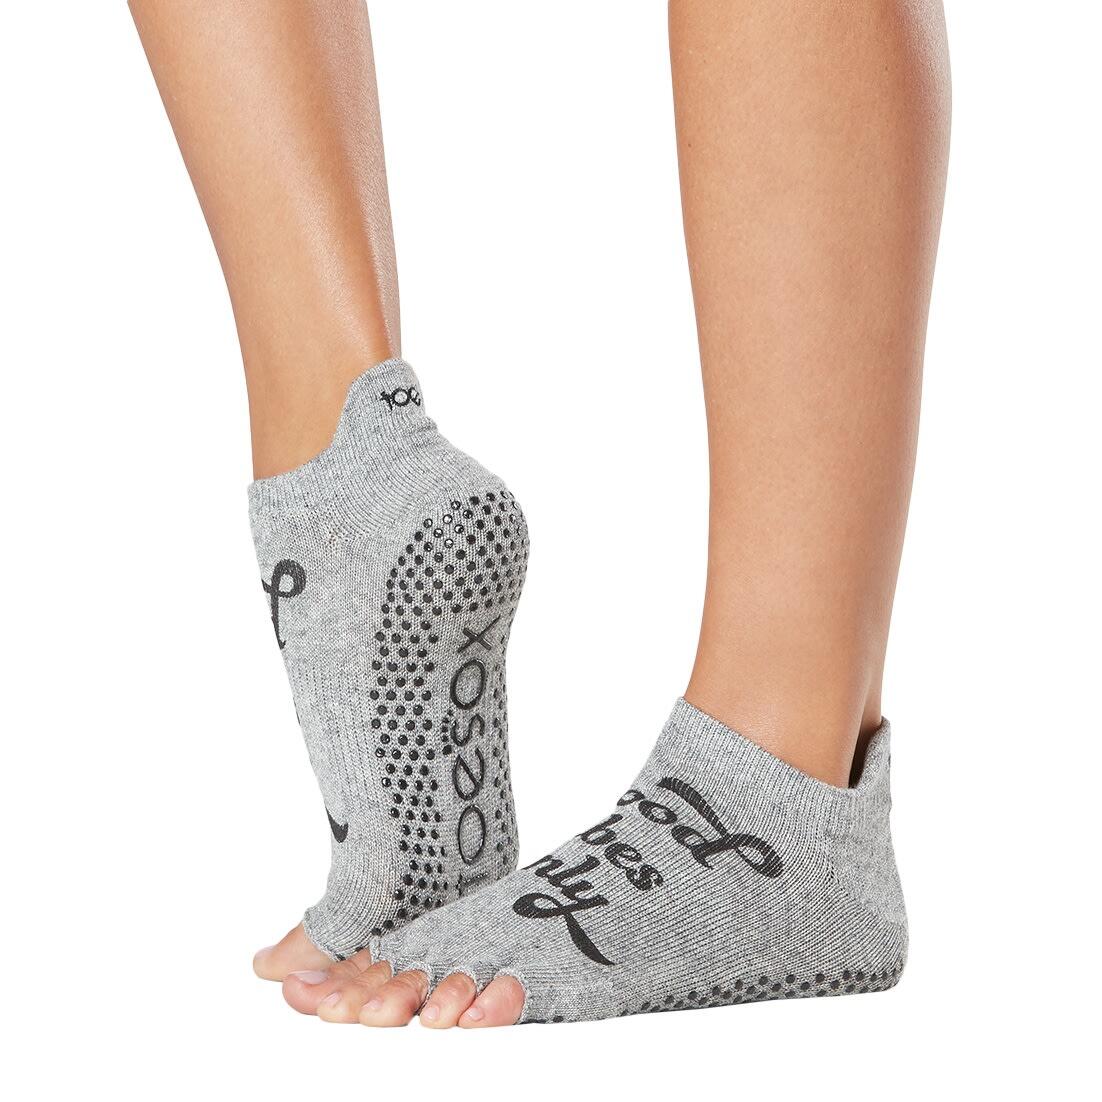 FITNESS-MAD Womens/Ladies Gripped Half Toe Socks (Grey)